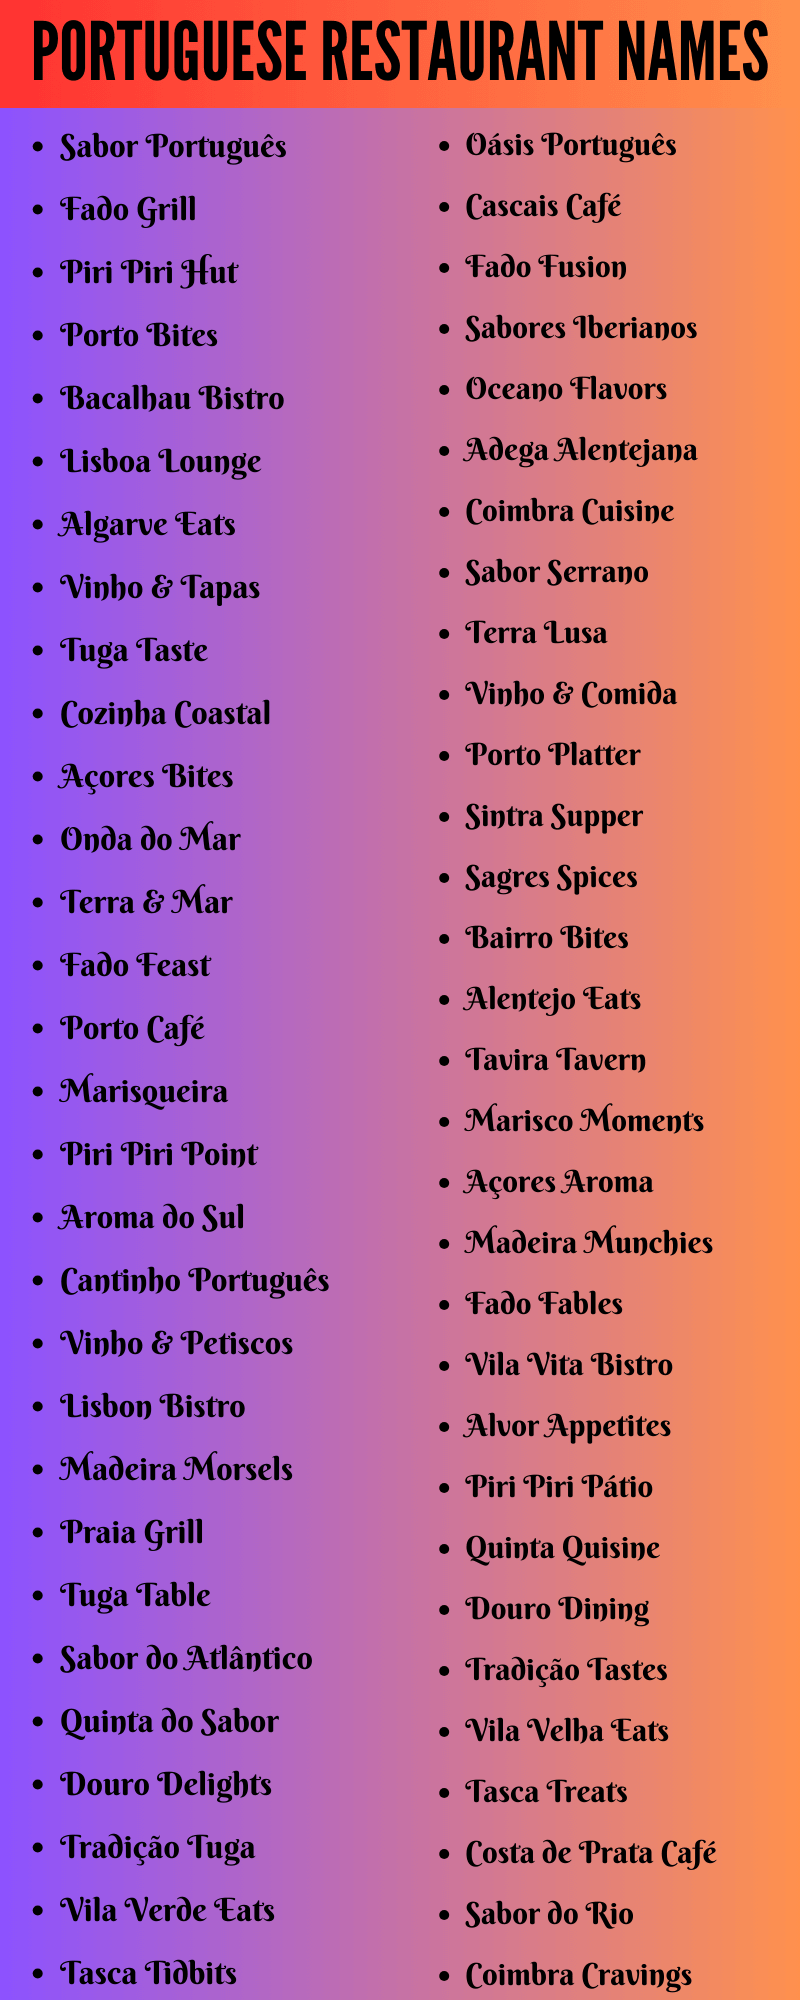 Portuguese Restaurant Names